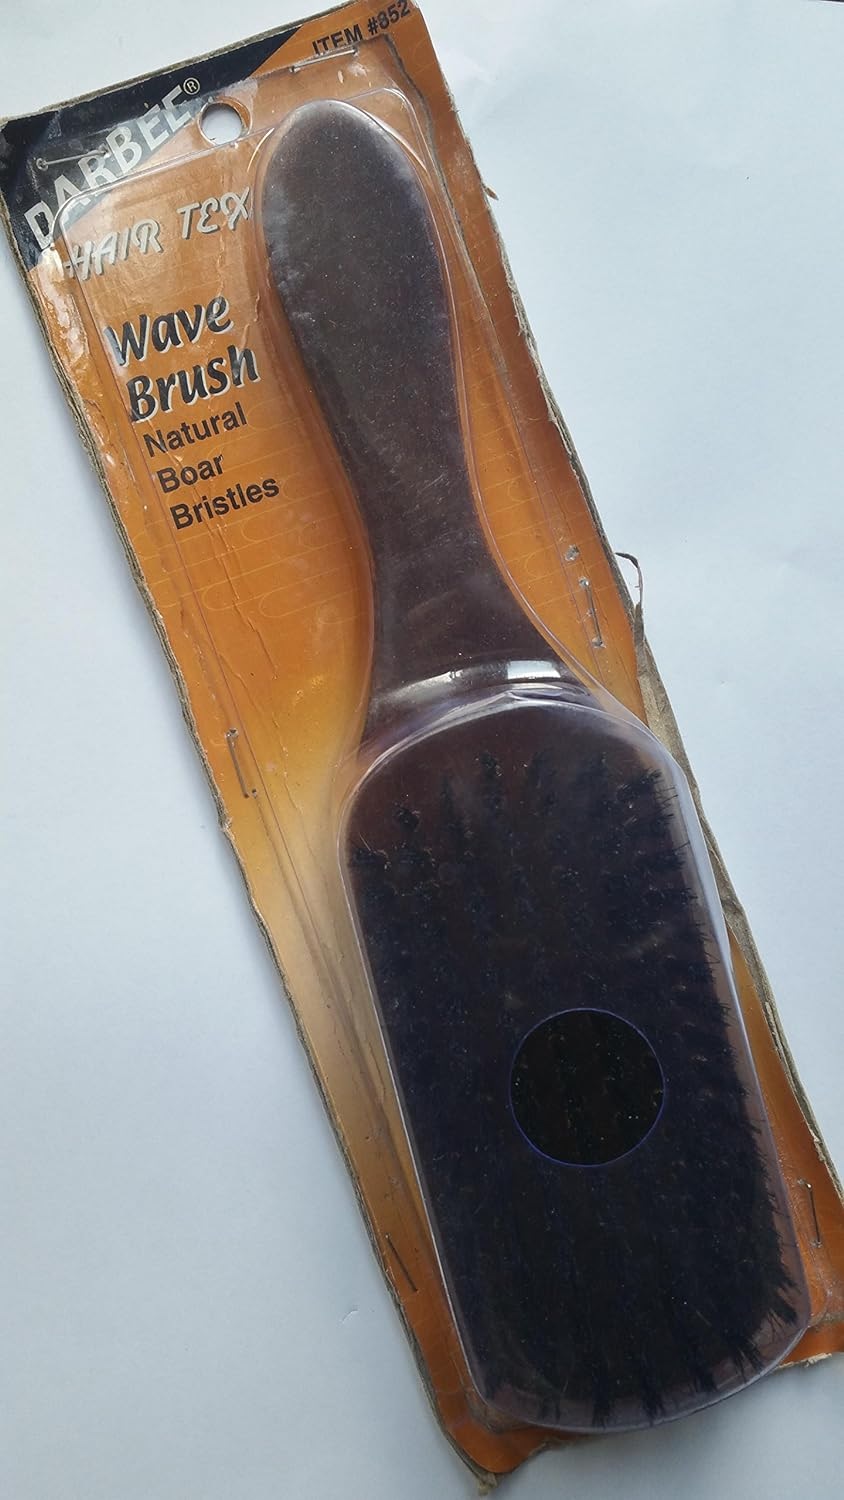 Darbee - hair tex wave brush natural boar bristles, No. 852